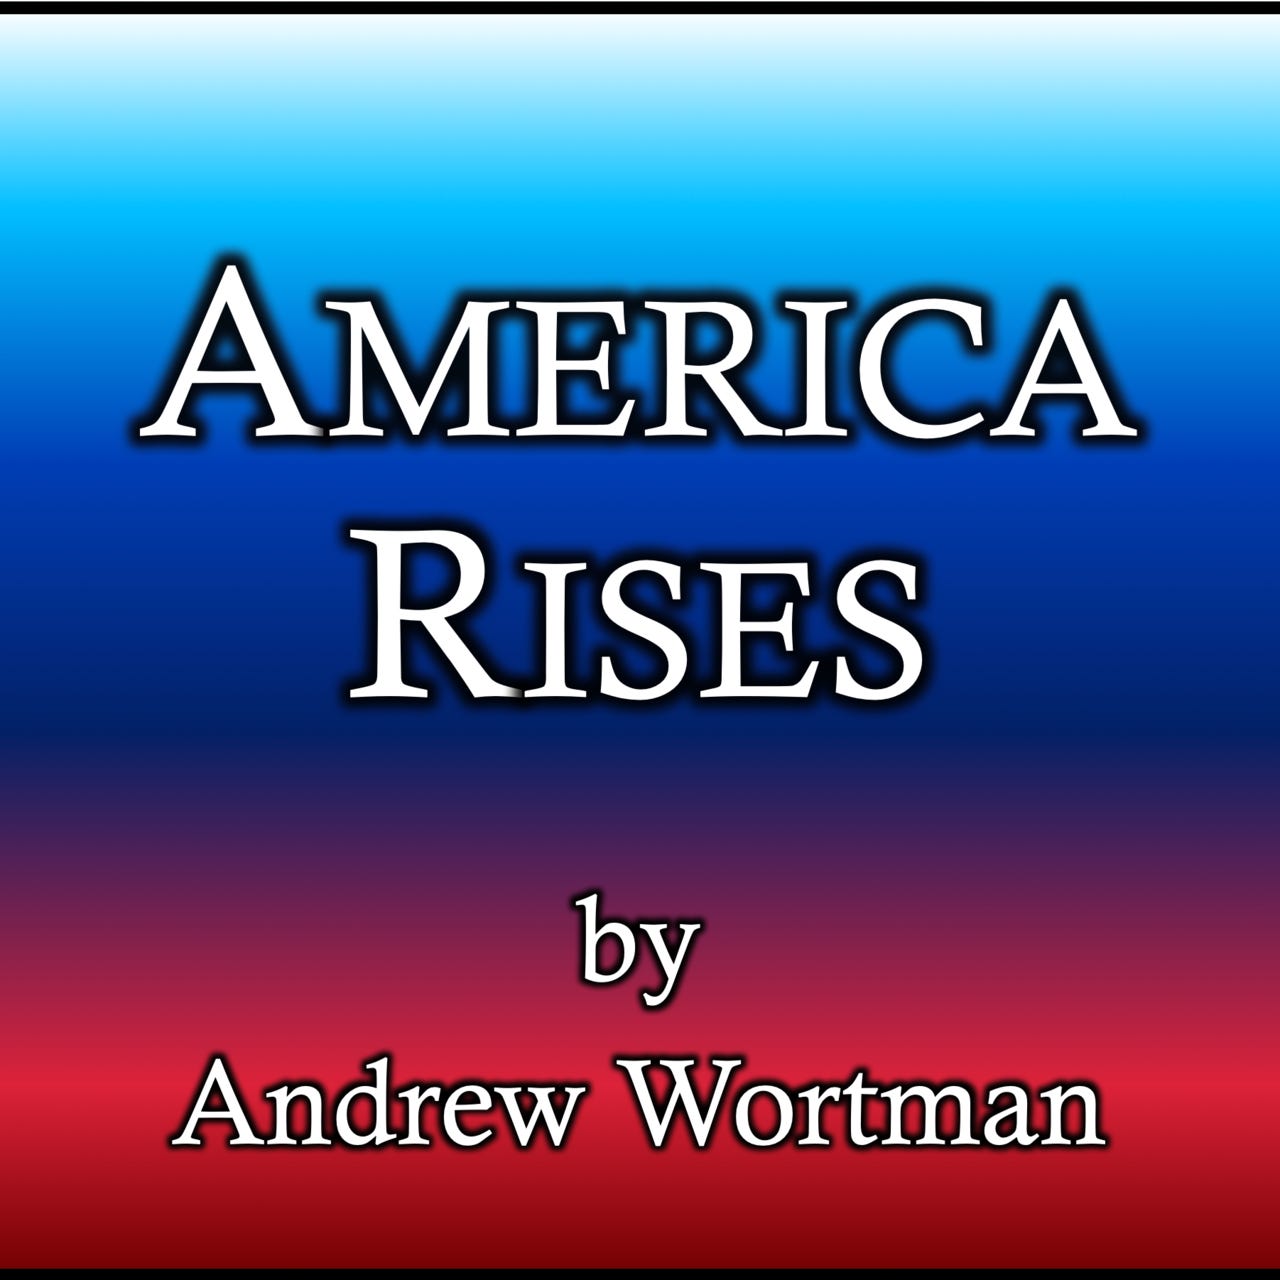 Artwork for 'America Rises' by Andrew Wortman